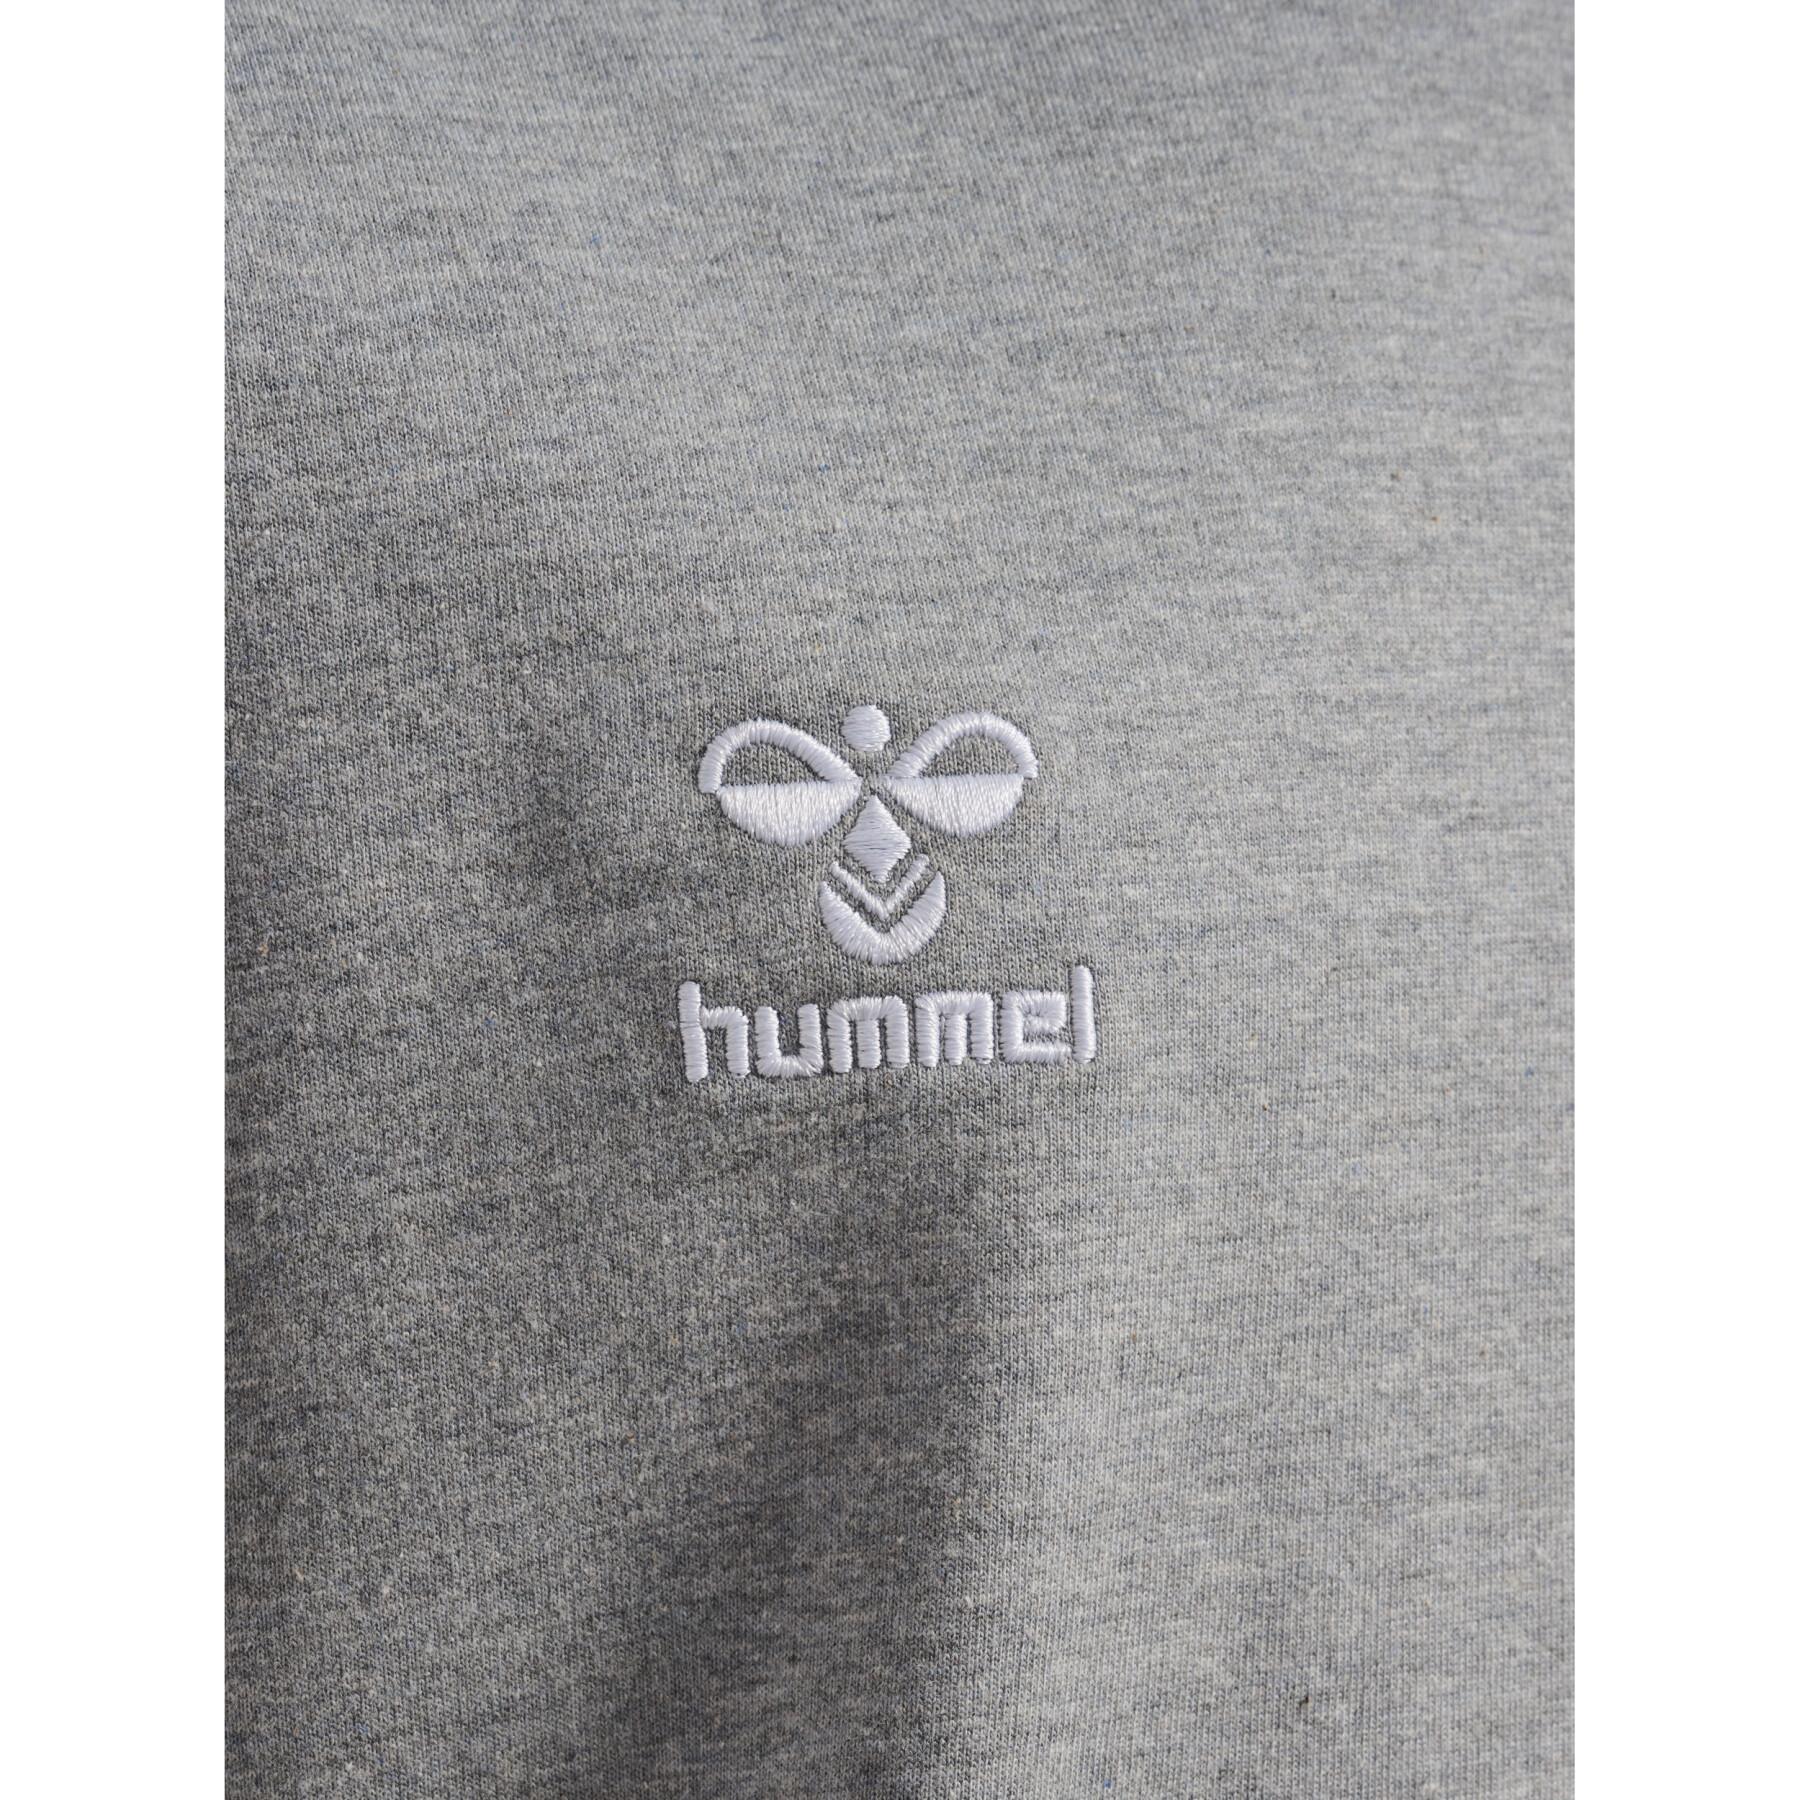 Sweatshirt child Hummel Go 2.0